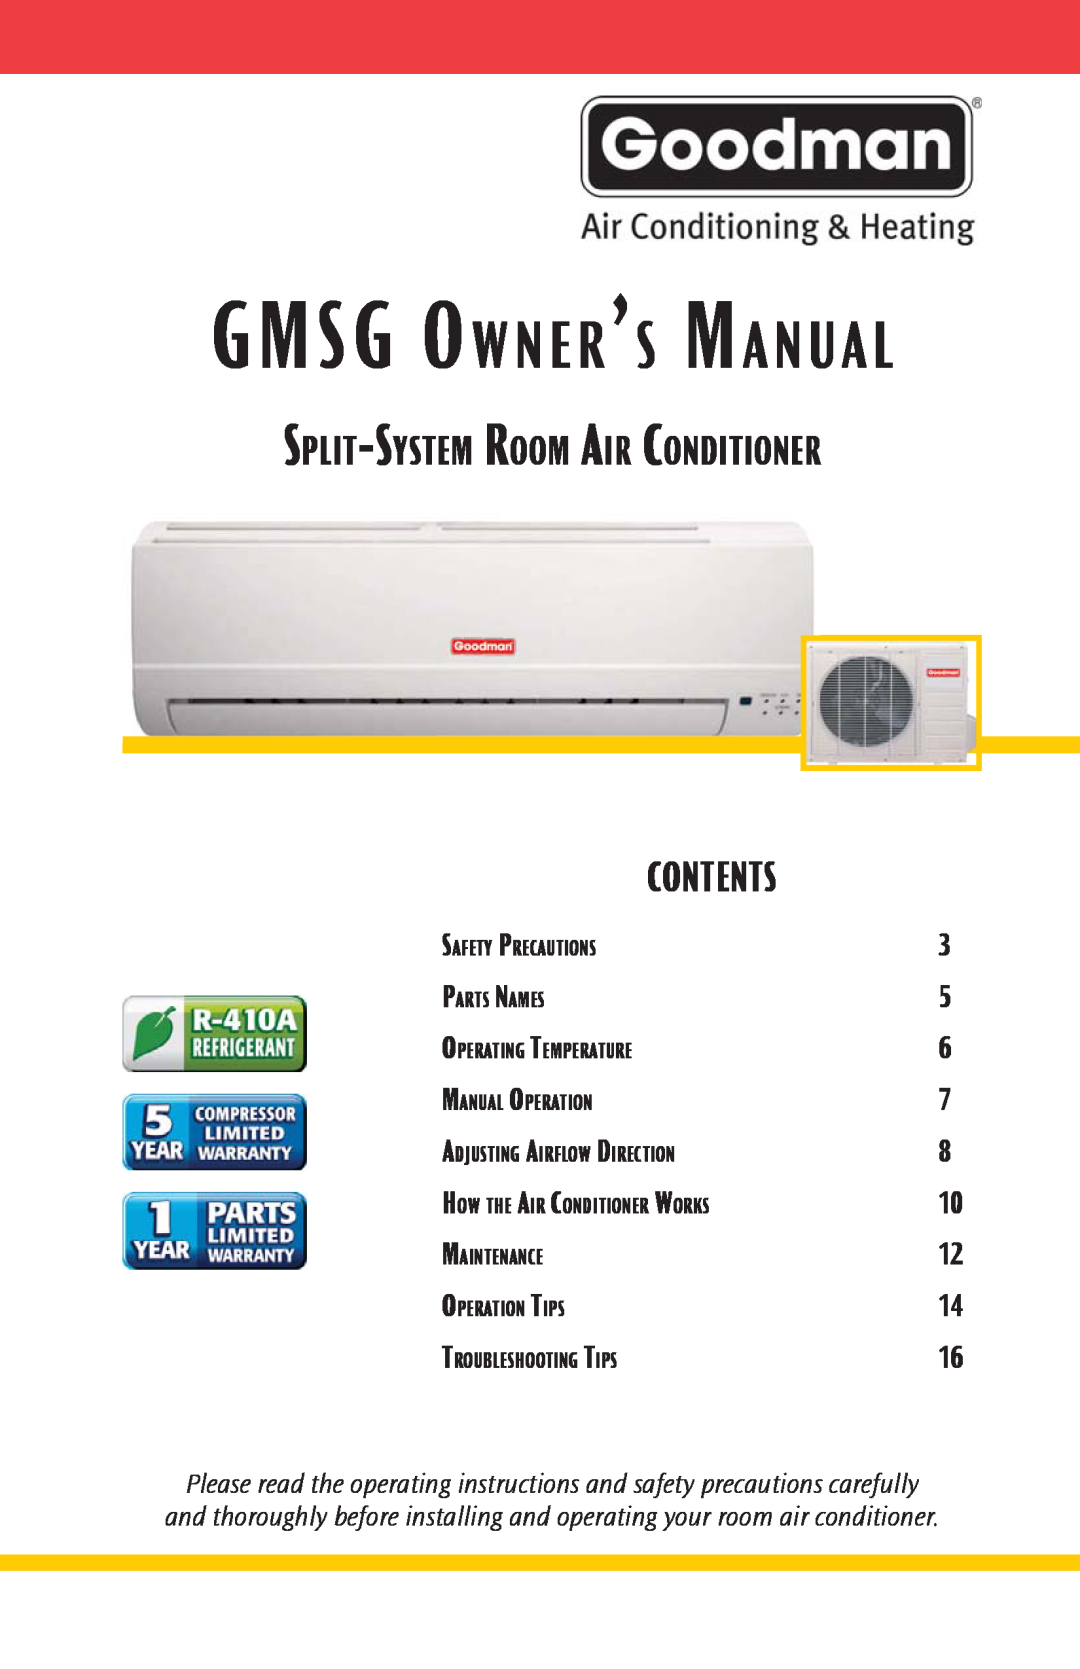 Goodmans GMSG owner manual Contents, Split-System Room Air Conditioner 